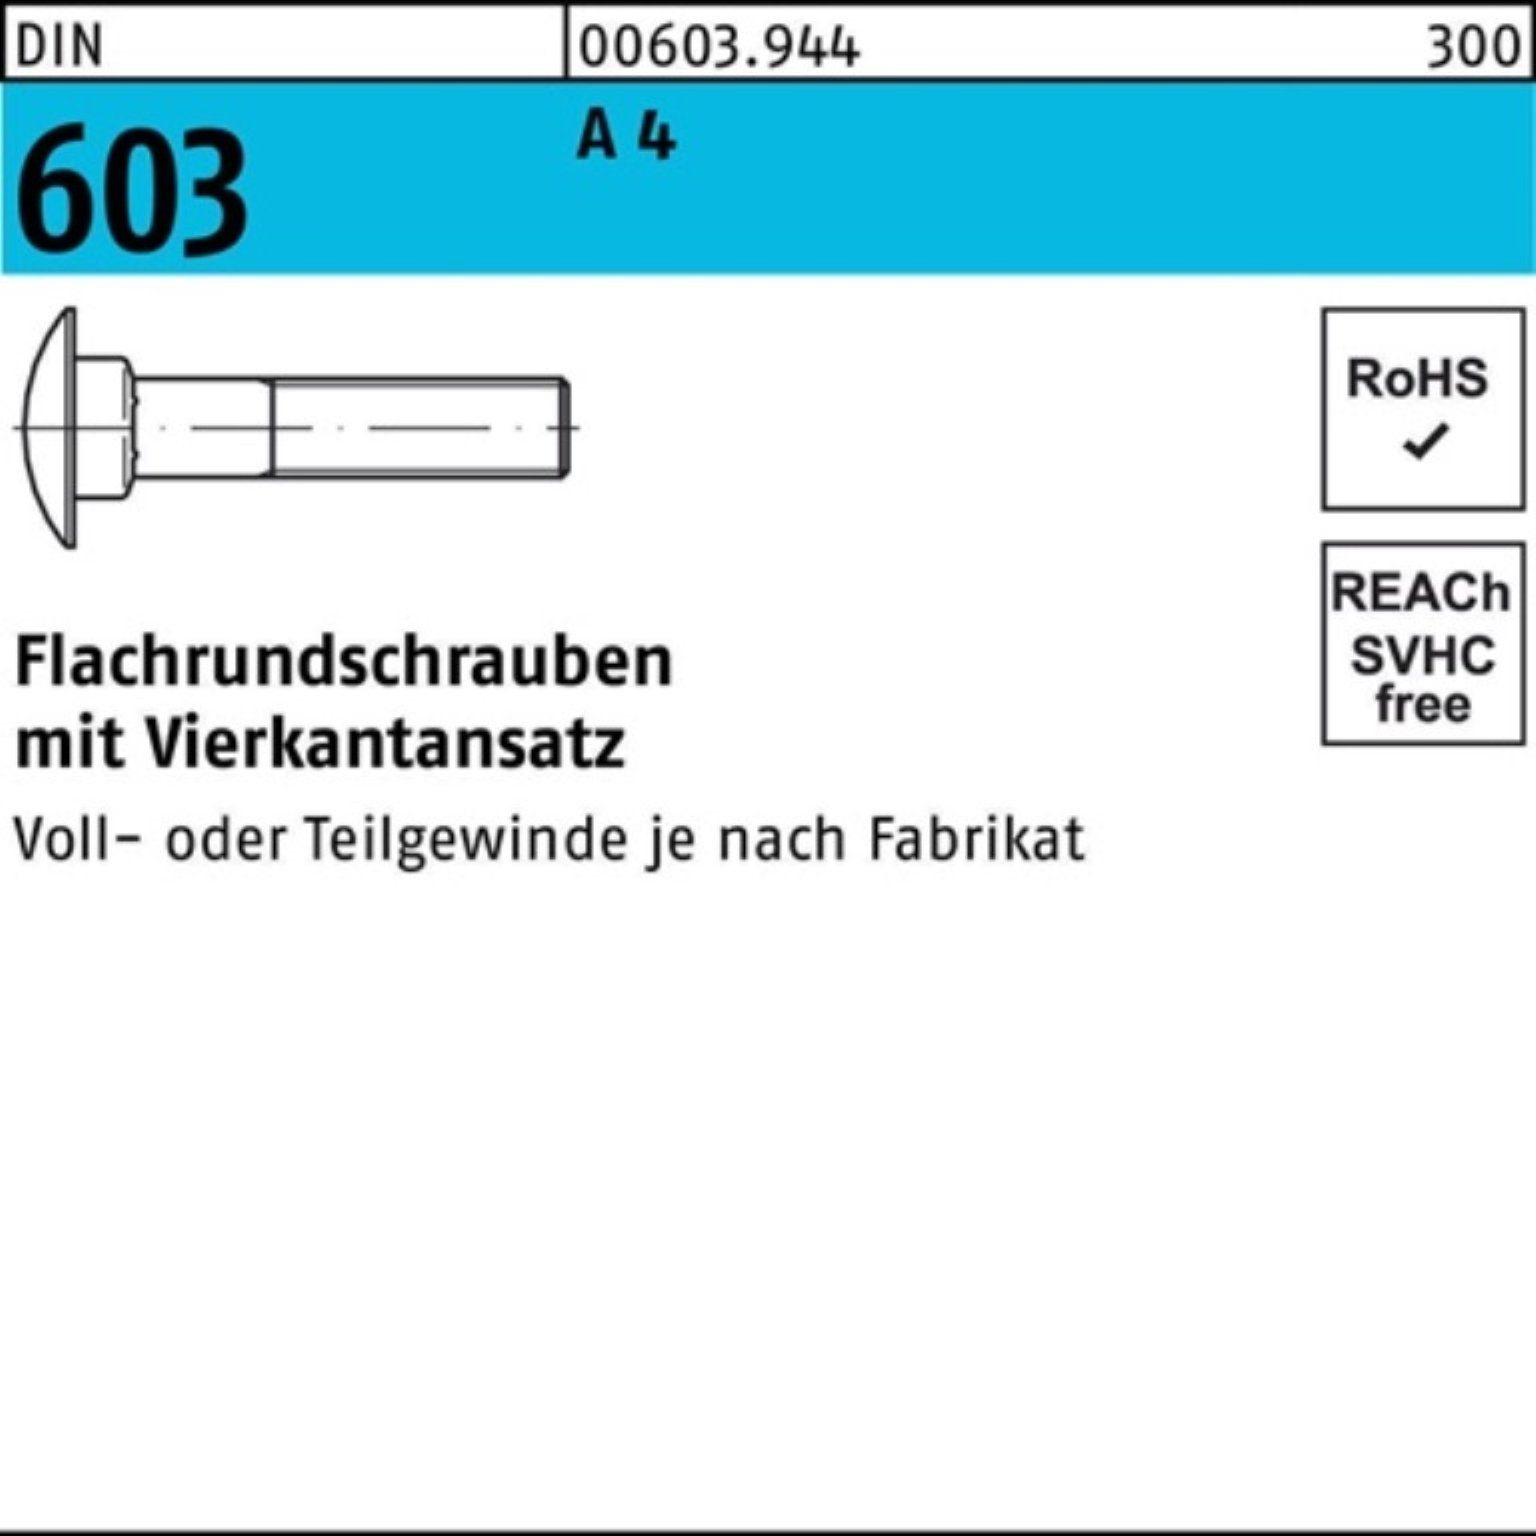 Reyher Schraube 100er Pack Flachrundschraube DIN 603 Vierkantansatz M8x 150 A 4 10 St